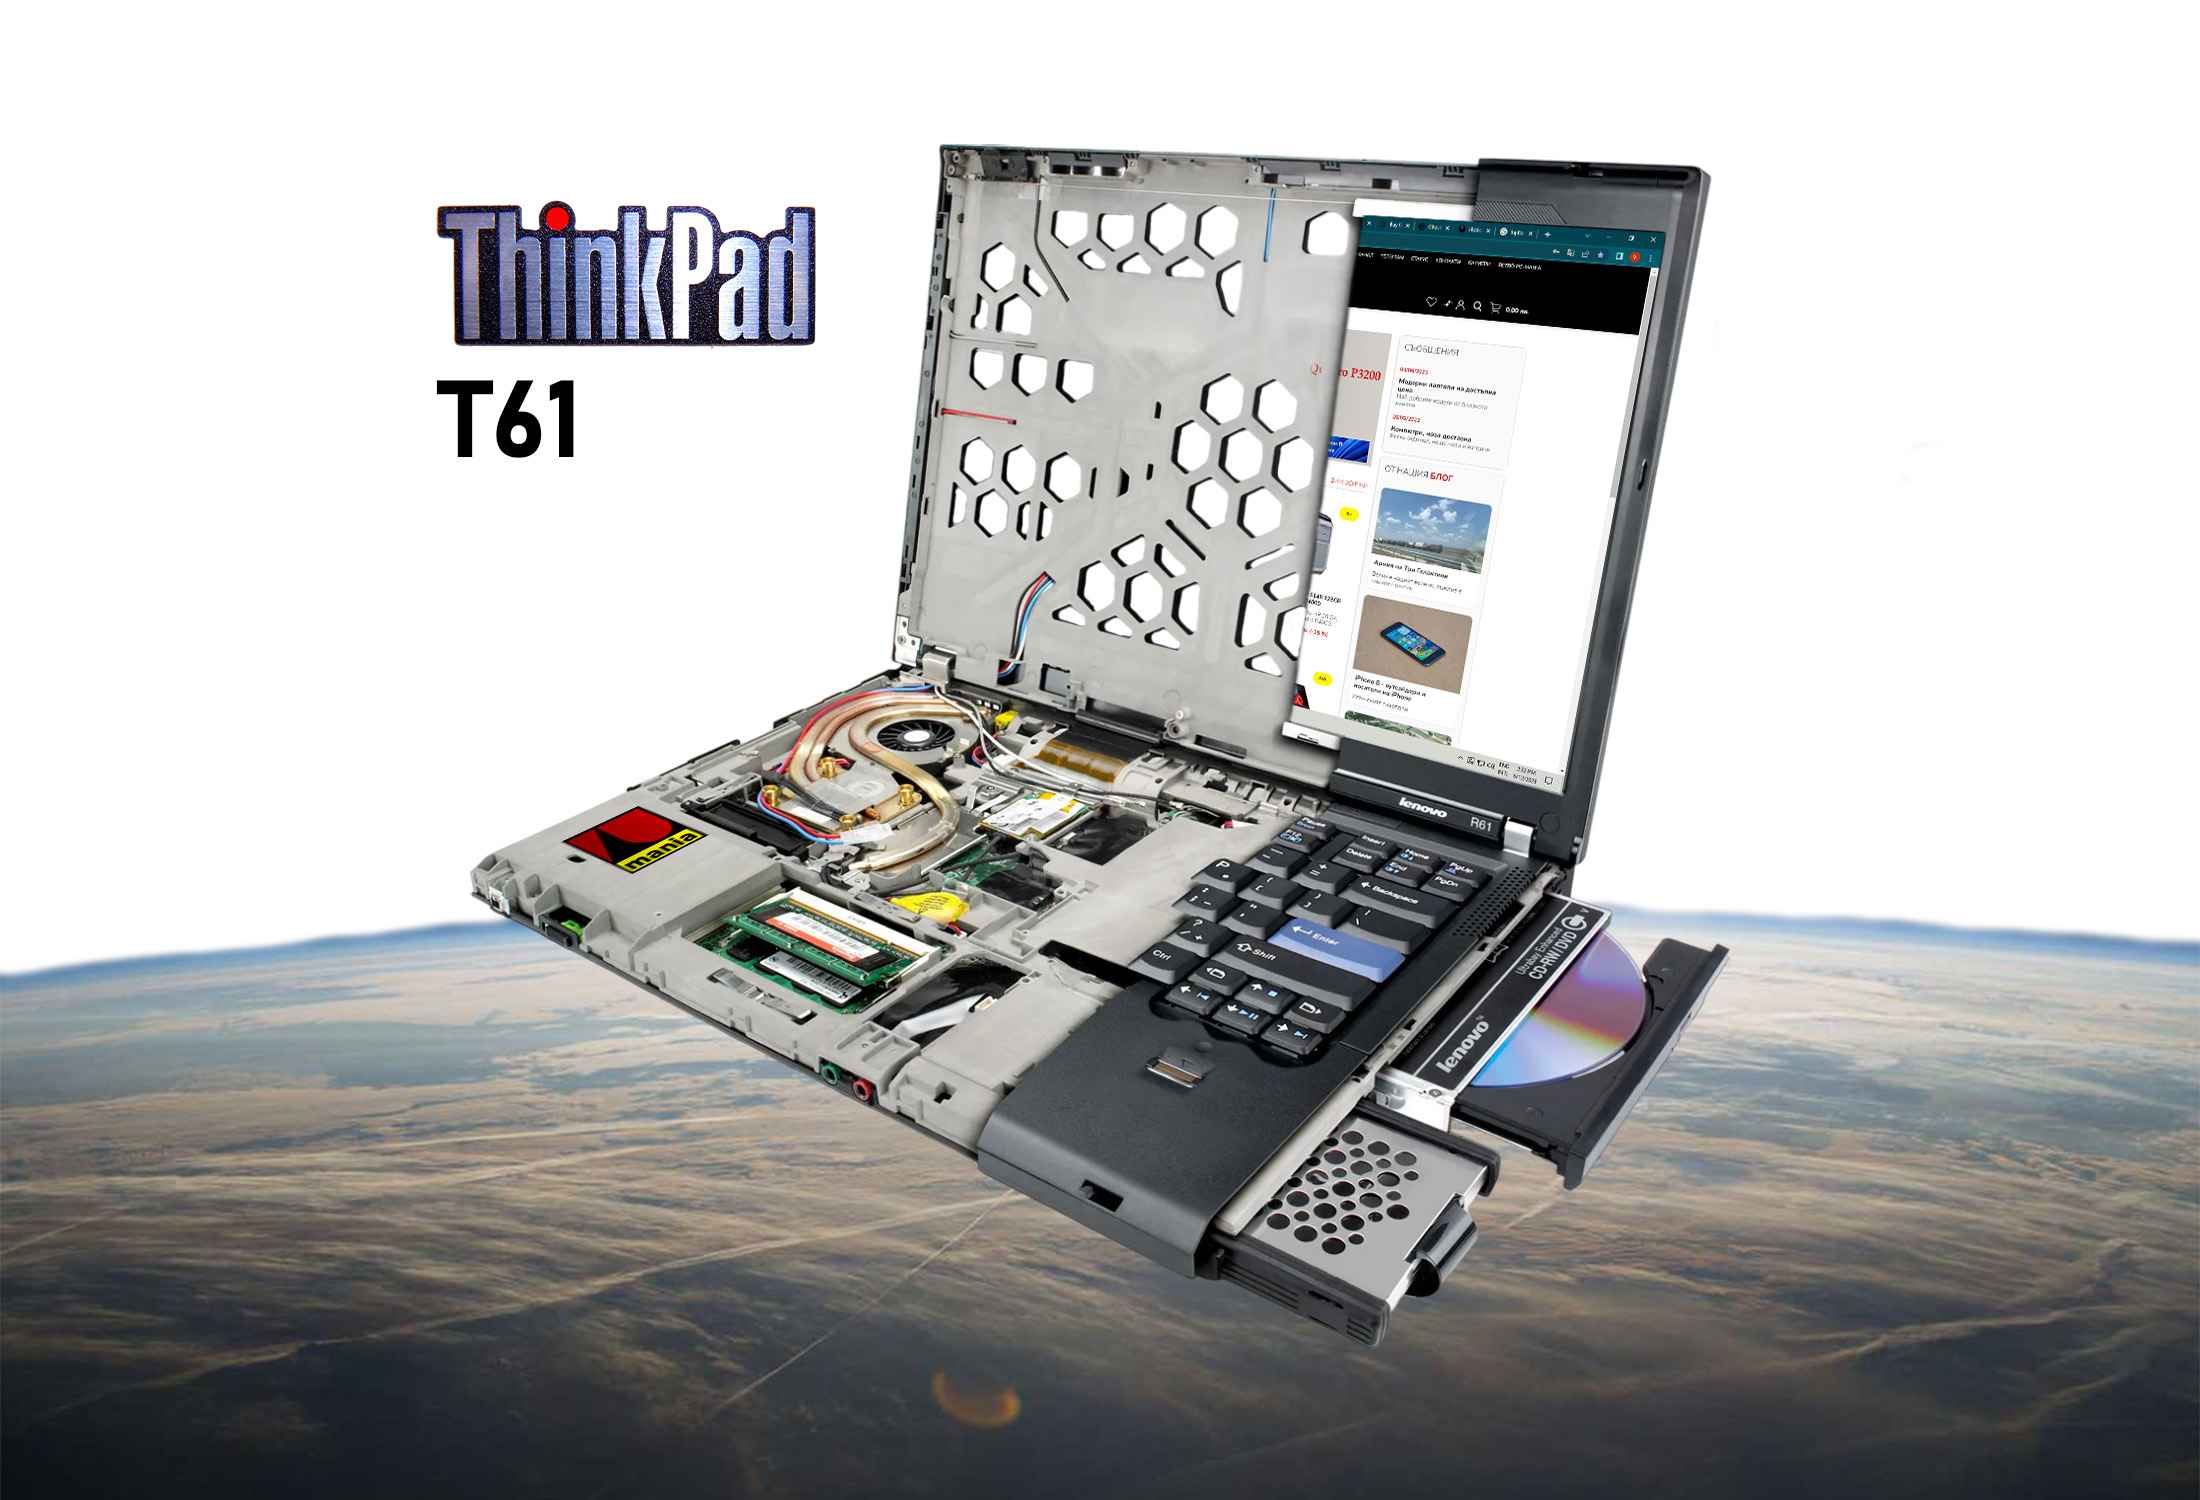 Lenovo Thinkpad T61 C2D T9300 4GB RAM NVS 140M 1680x1050